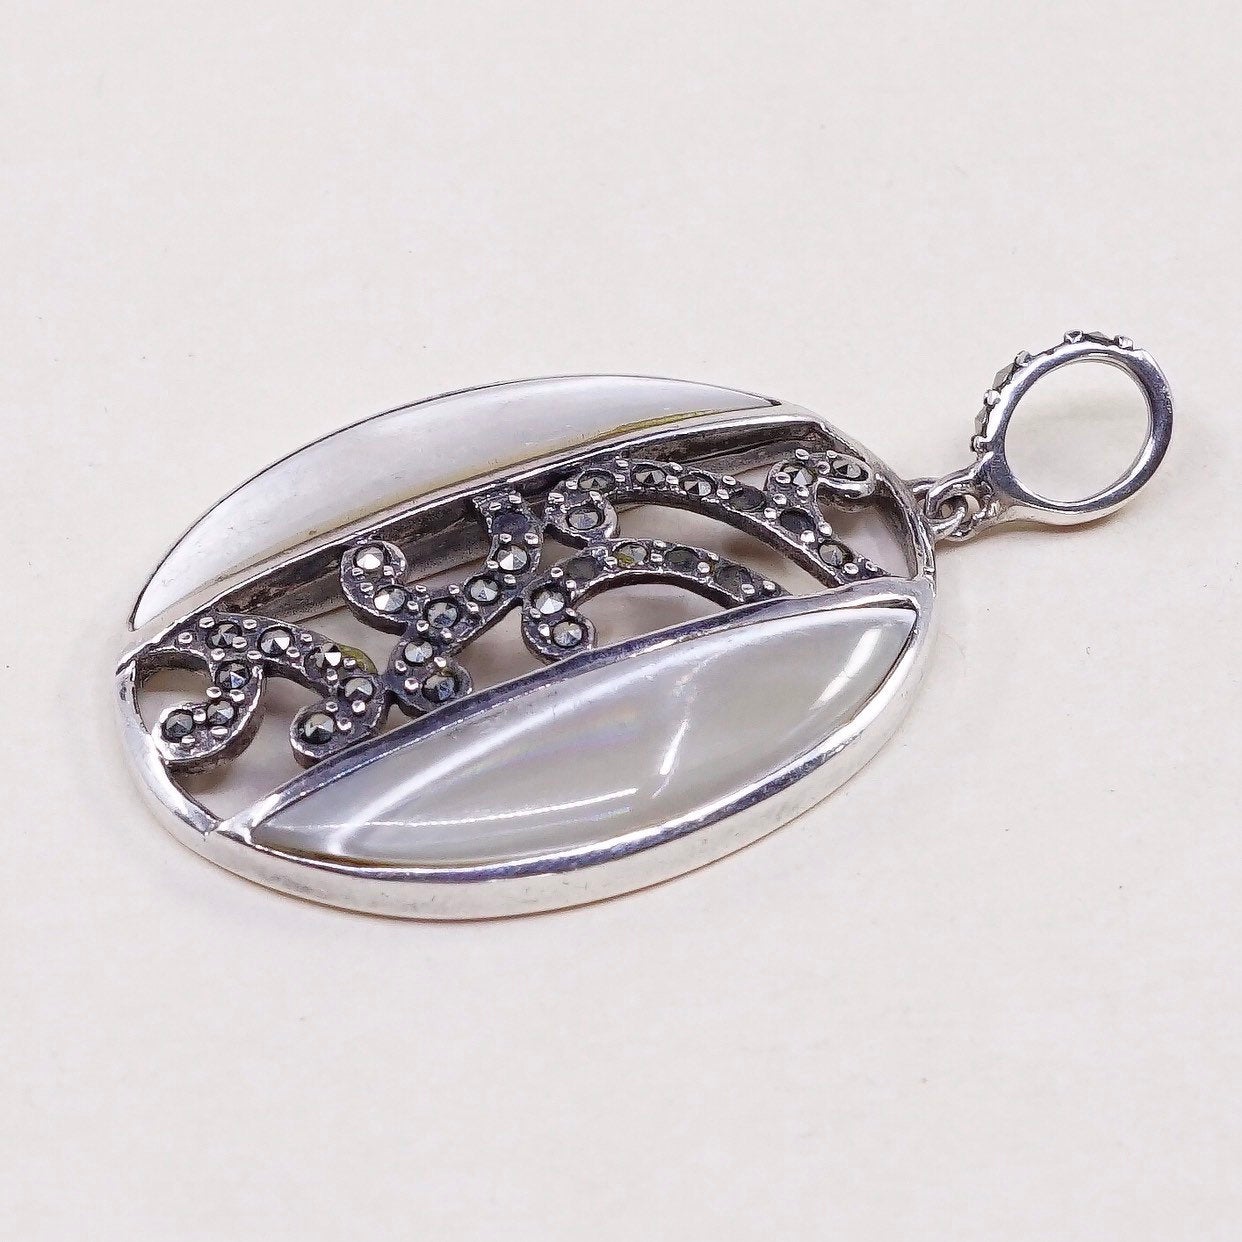 VTG sterling silver handmade pendant, mother of pearl w/ marcasite pendant